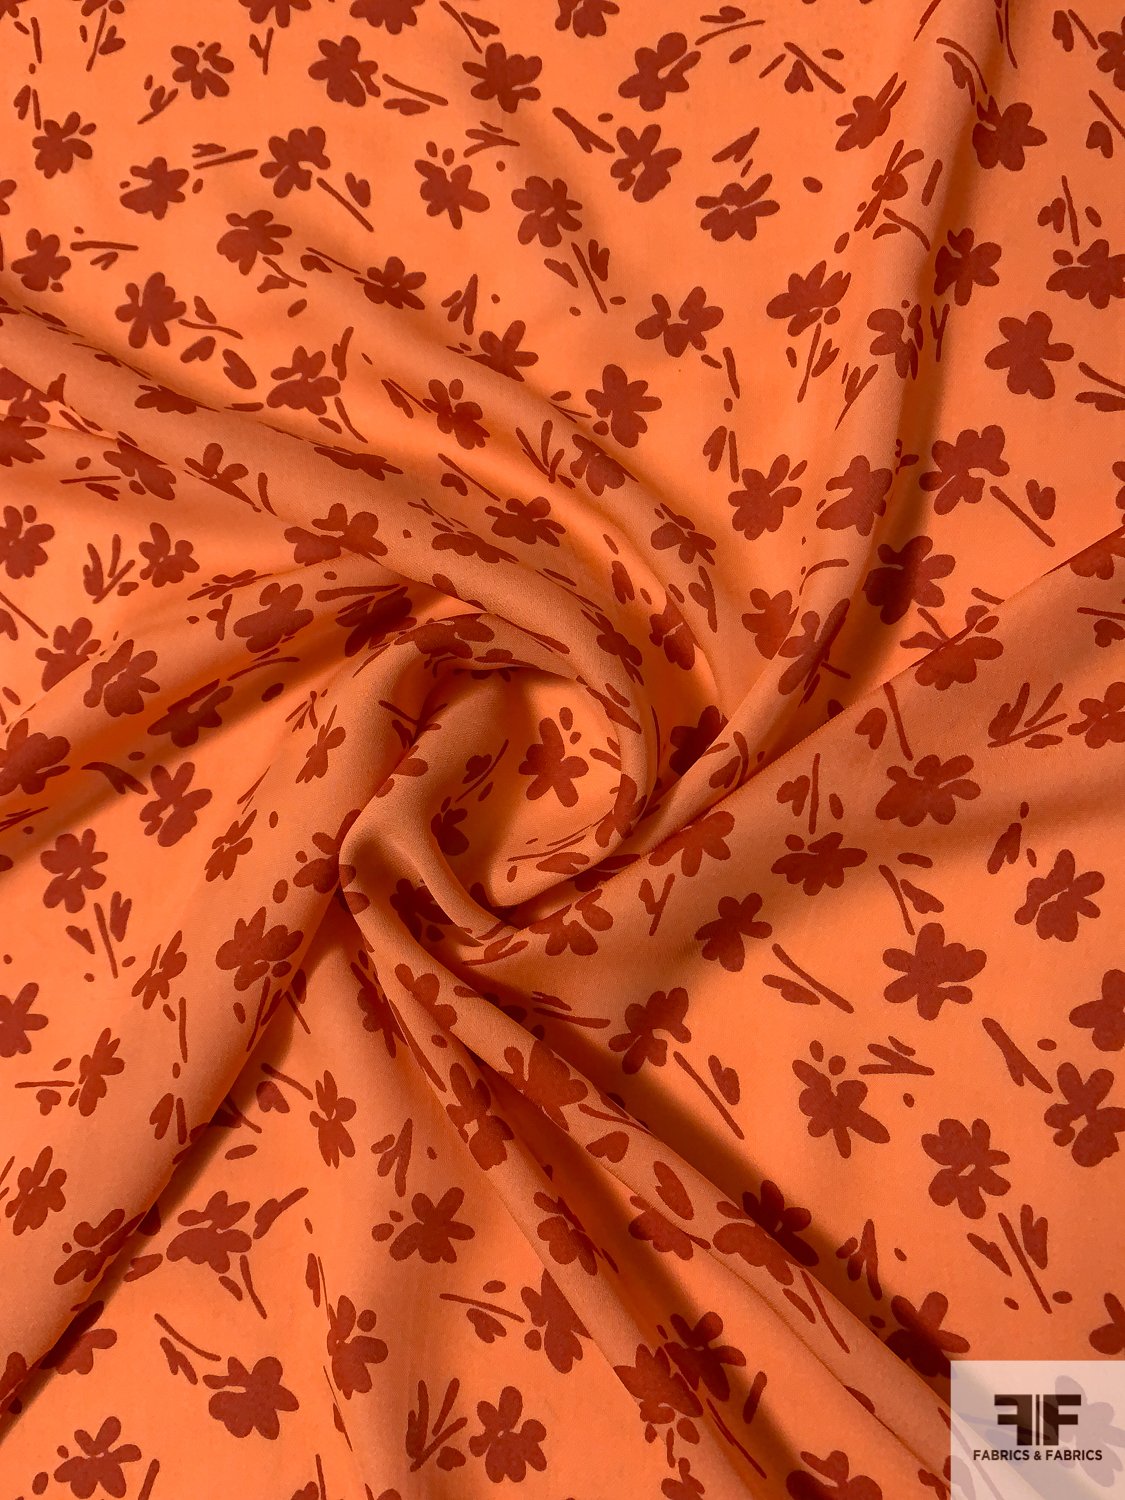 Youthful Floral Silhouette Printed Silk Georgette - Coral / Burnt Brick Orange